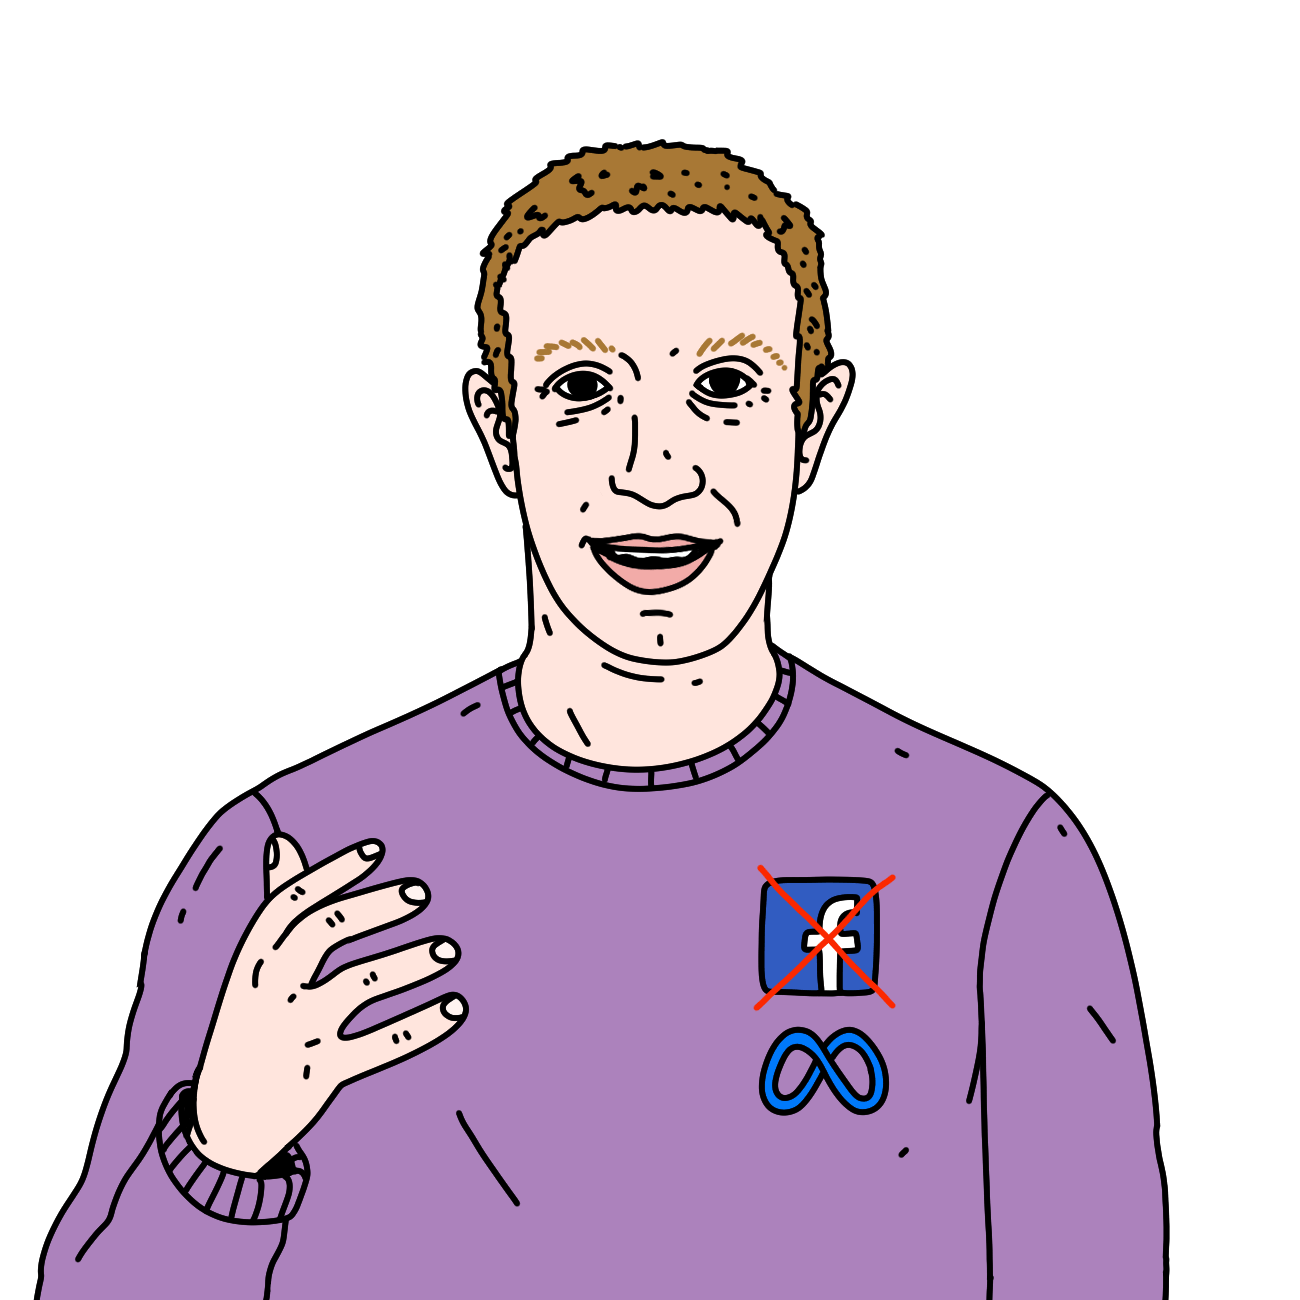 Mark Zuckerberg billionaire